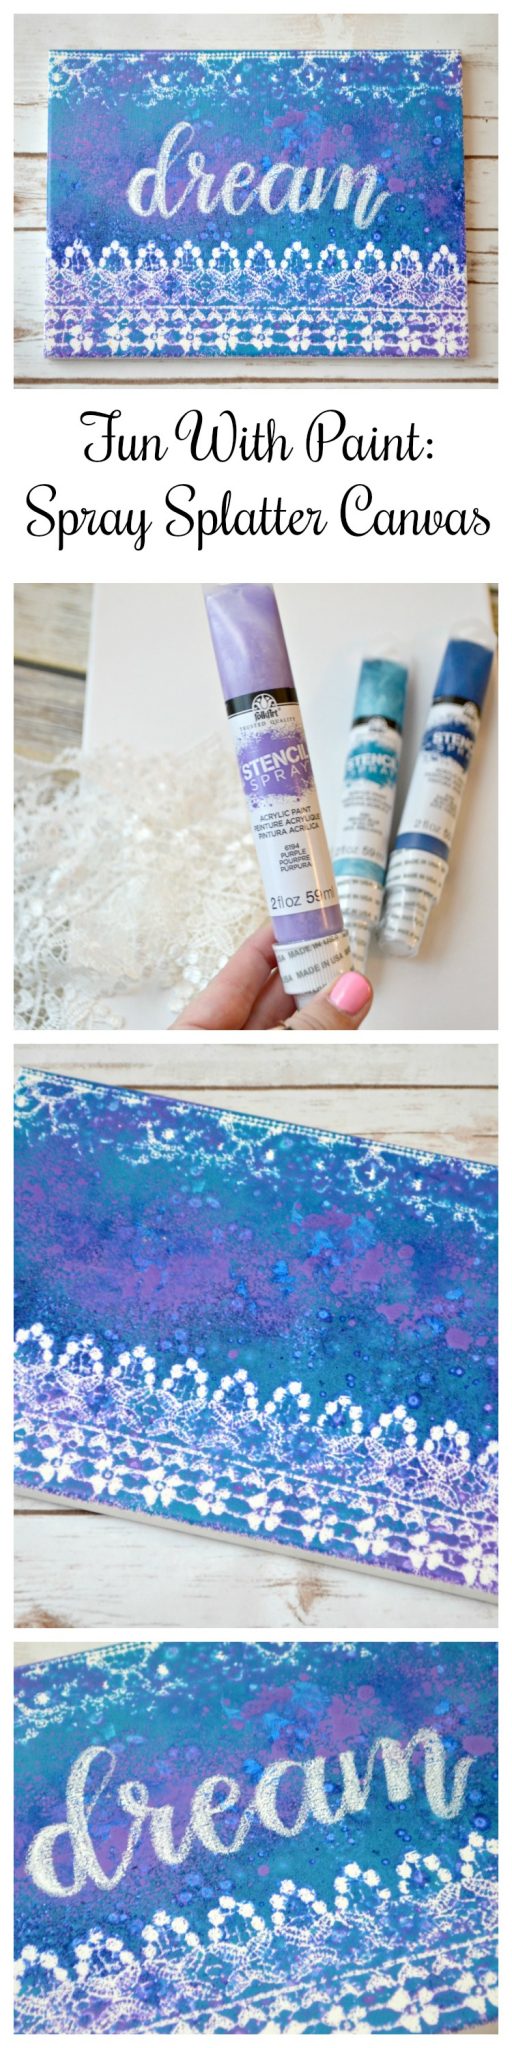 Fun With Paint: Spray Splatter Canvas